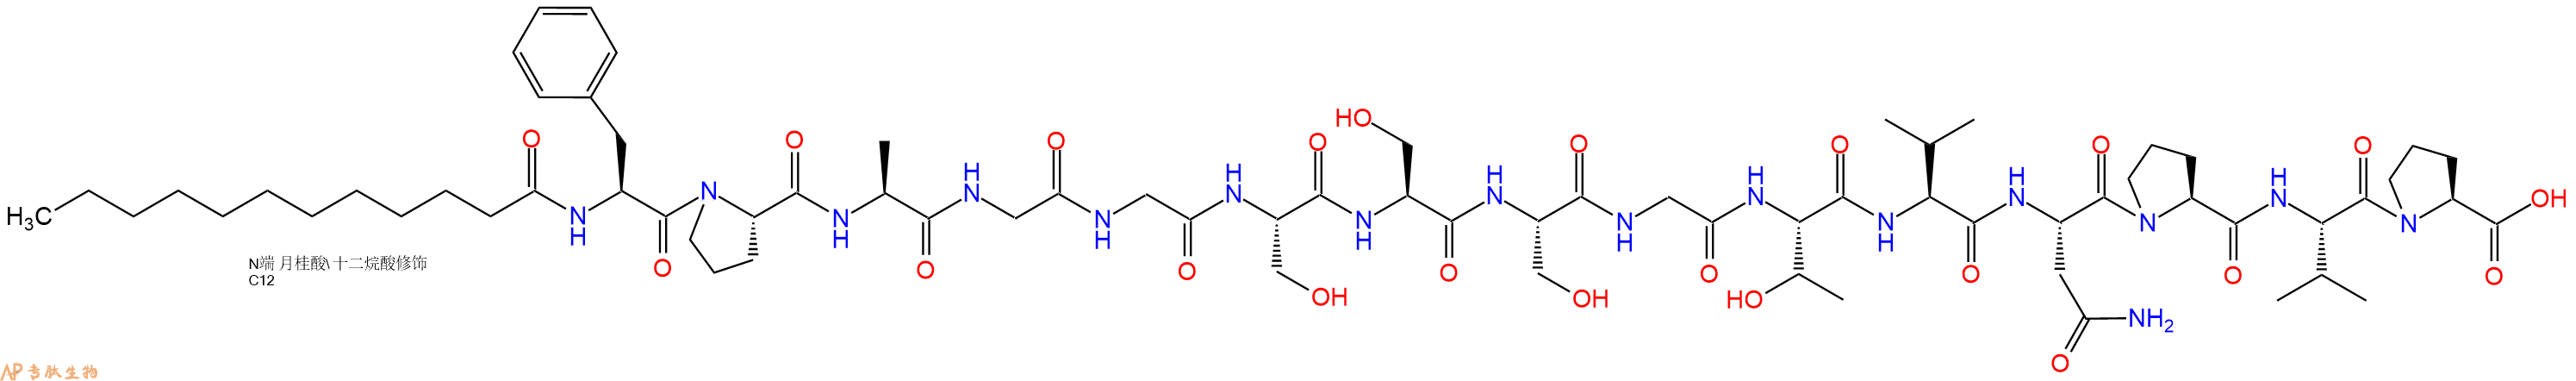 专肽生物产品Lauricacid-Phe-Pro-Ala-Gly-Gly-Ser-Ser-Ser-Gly-Thr